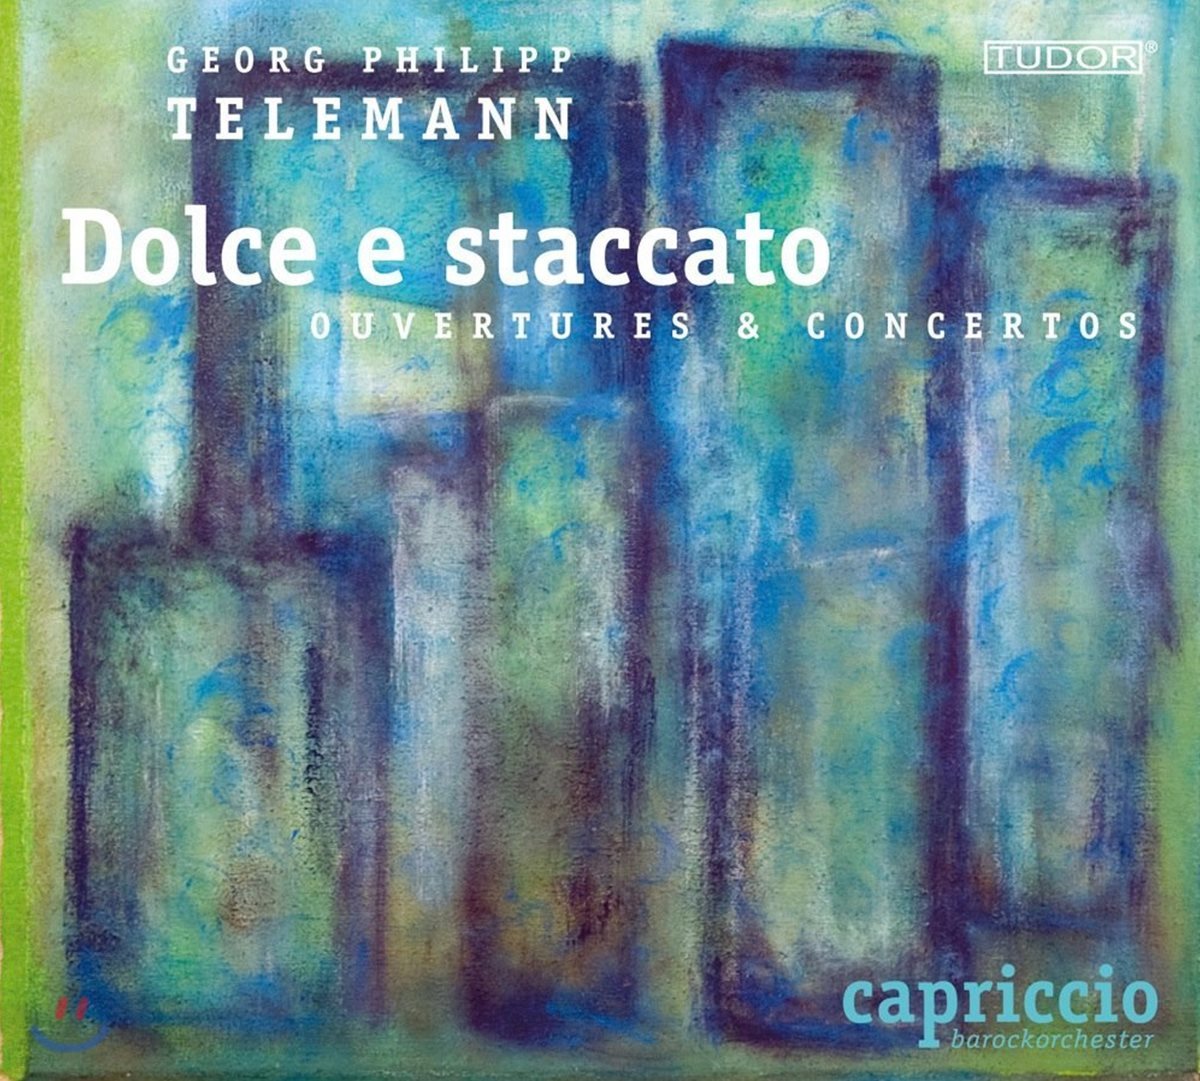 Capriccio Barockorchester 부드럽고 경쾌하게 - 텔레만: 서곡, 협주곡, 소나타 (Dolce e Staccato - Telemann: Overtures, Concertos, Sonatas)